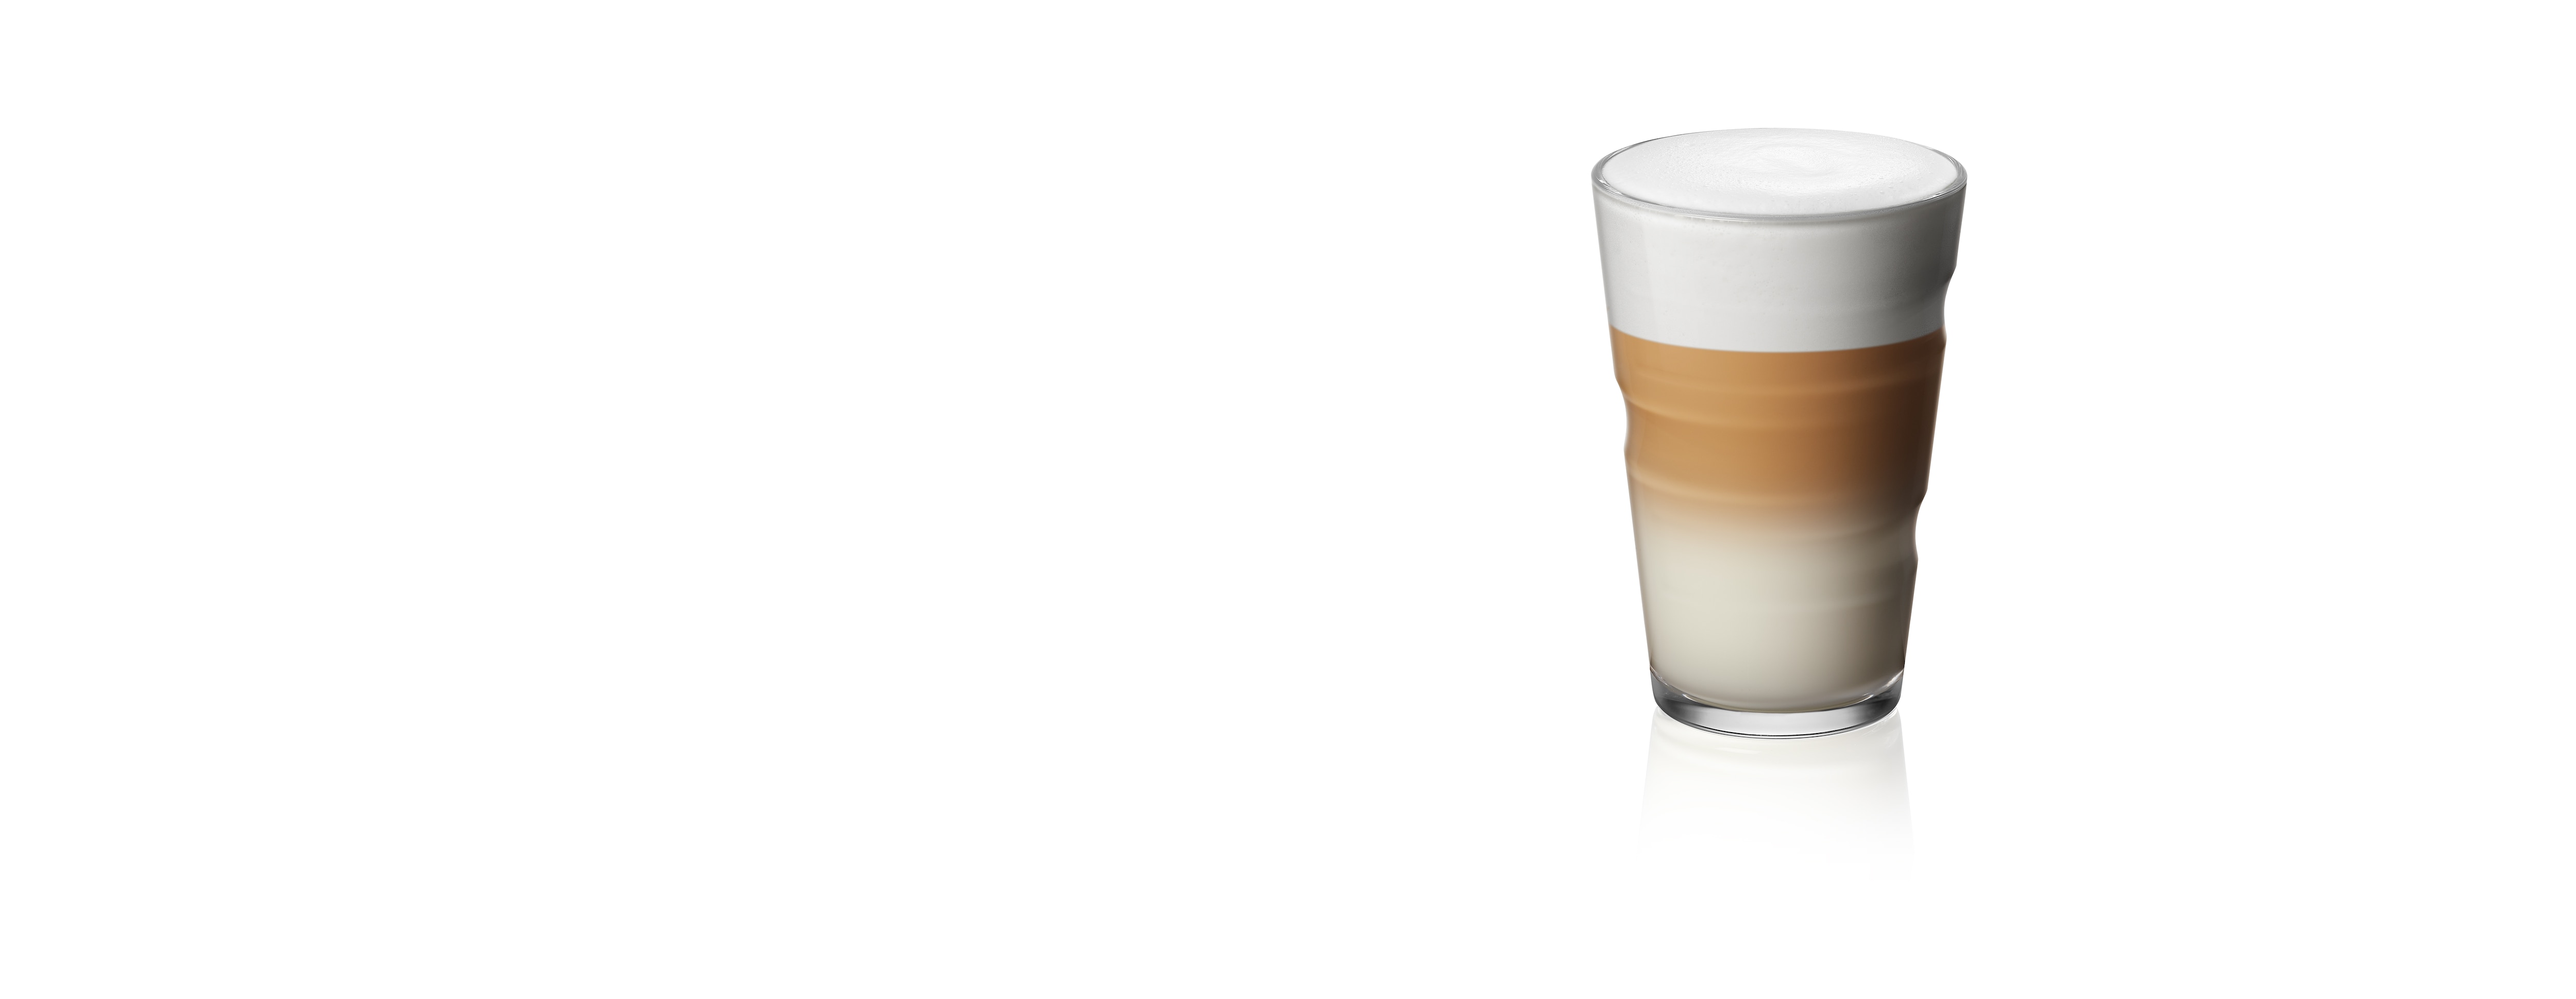 Nespresso VIEW Recipe Glass Set of Two-2 12 oz Coffee Drink Glasses #3781